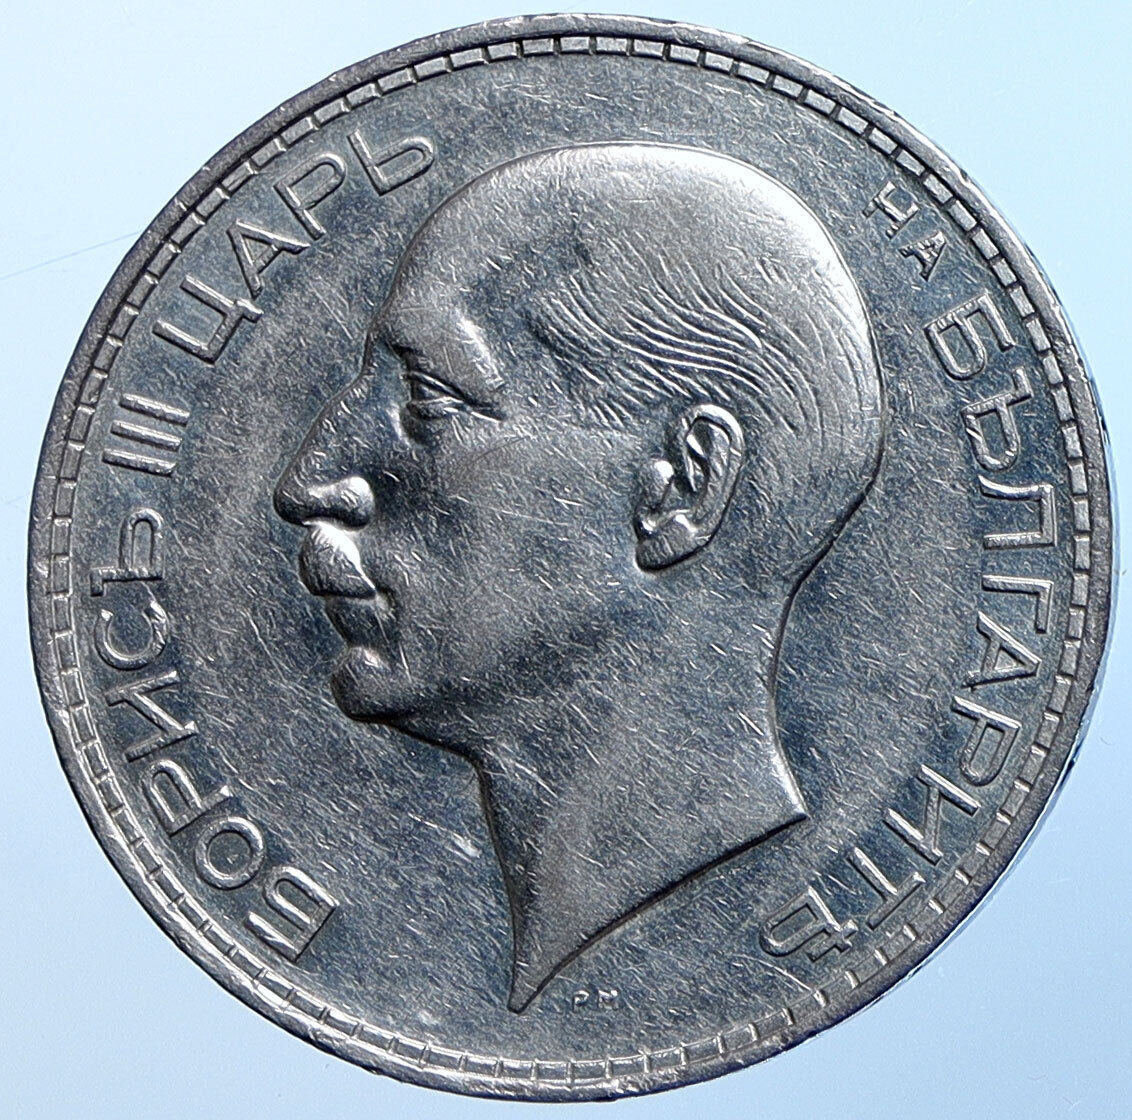 1937 Boris Iii Tsar Of Bulgaria 100 Leva Large Old European Silver Coin I114699